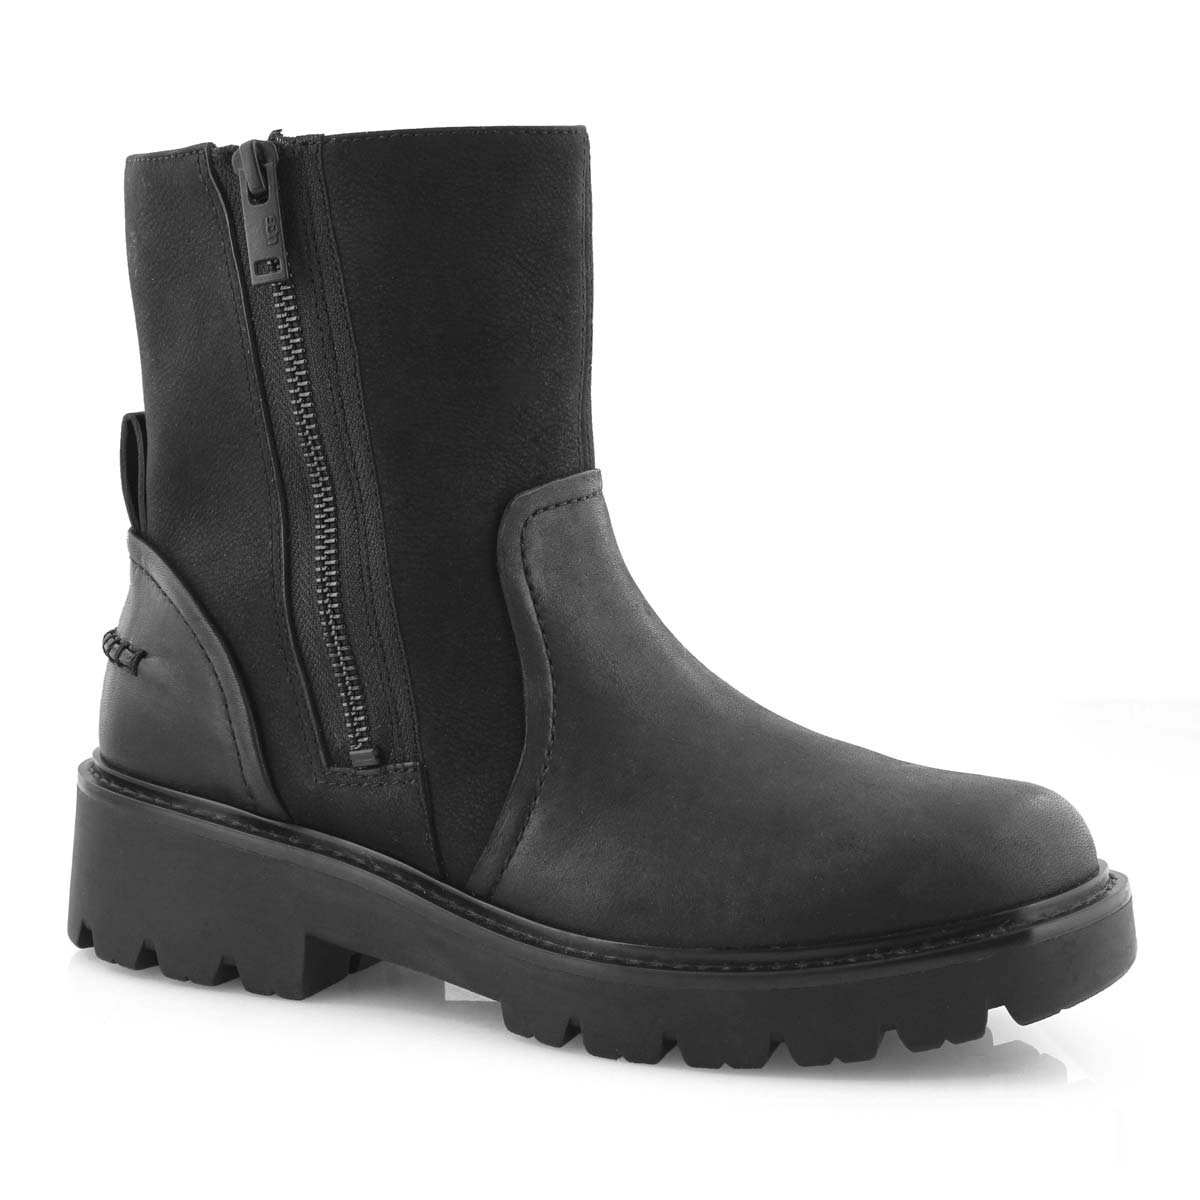 softmoc ugg winter boots